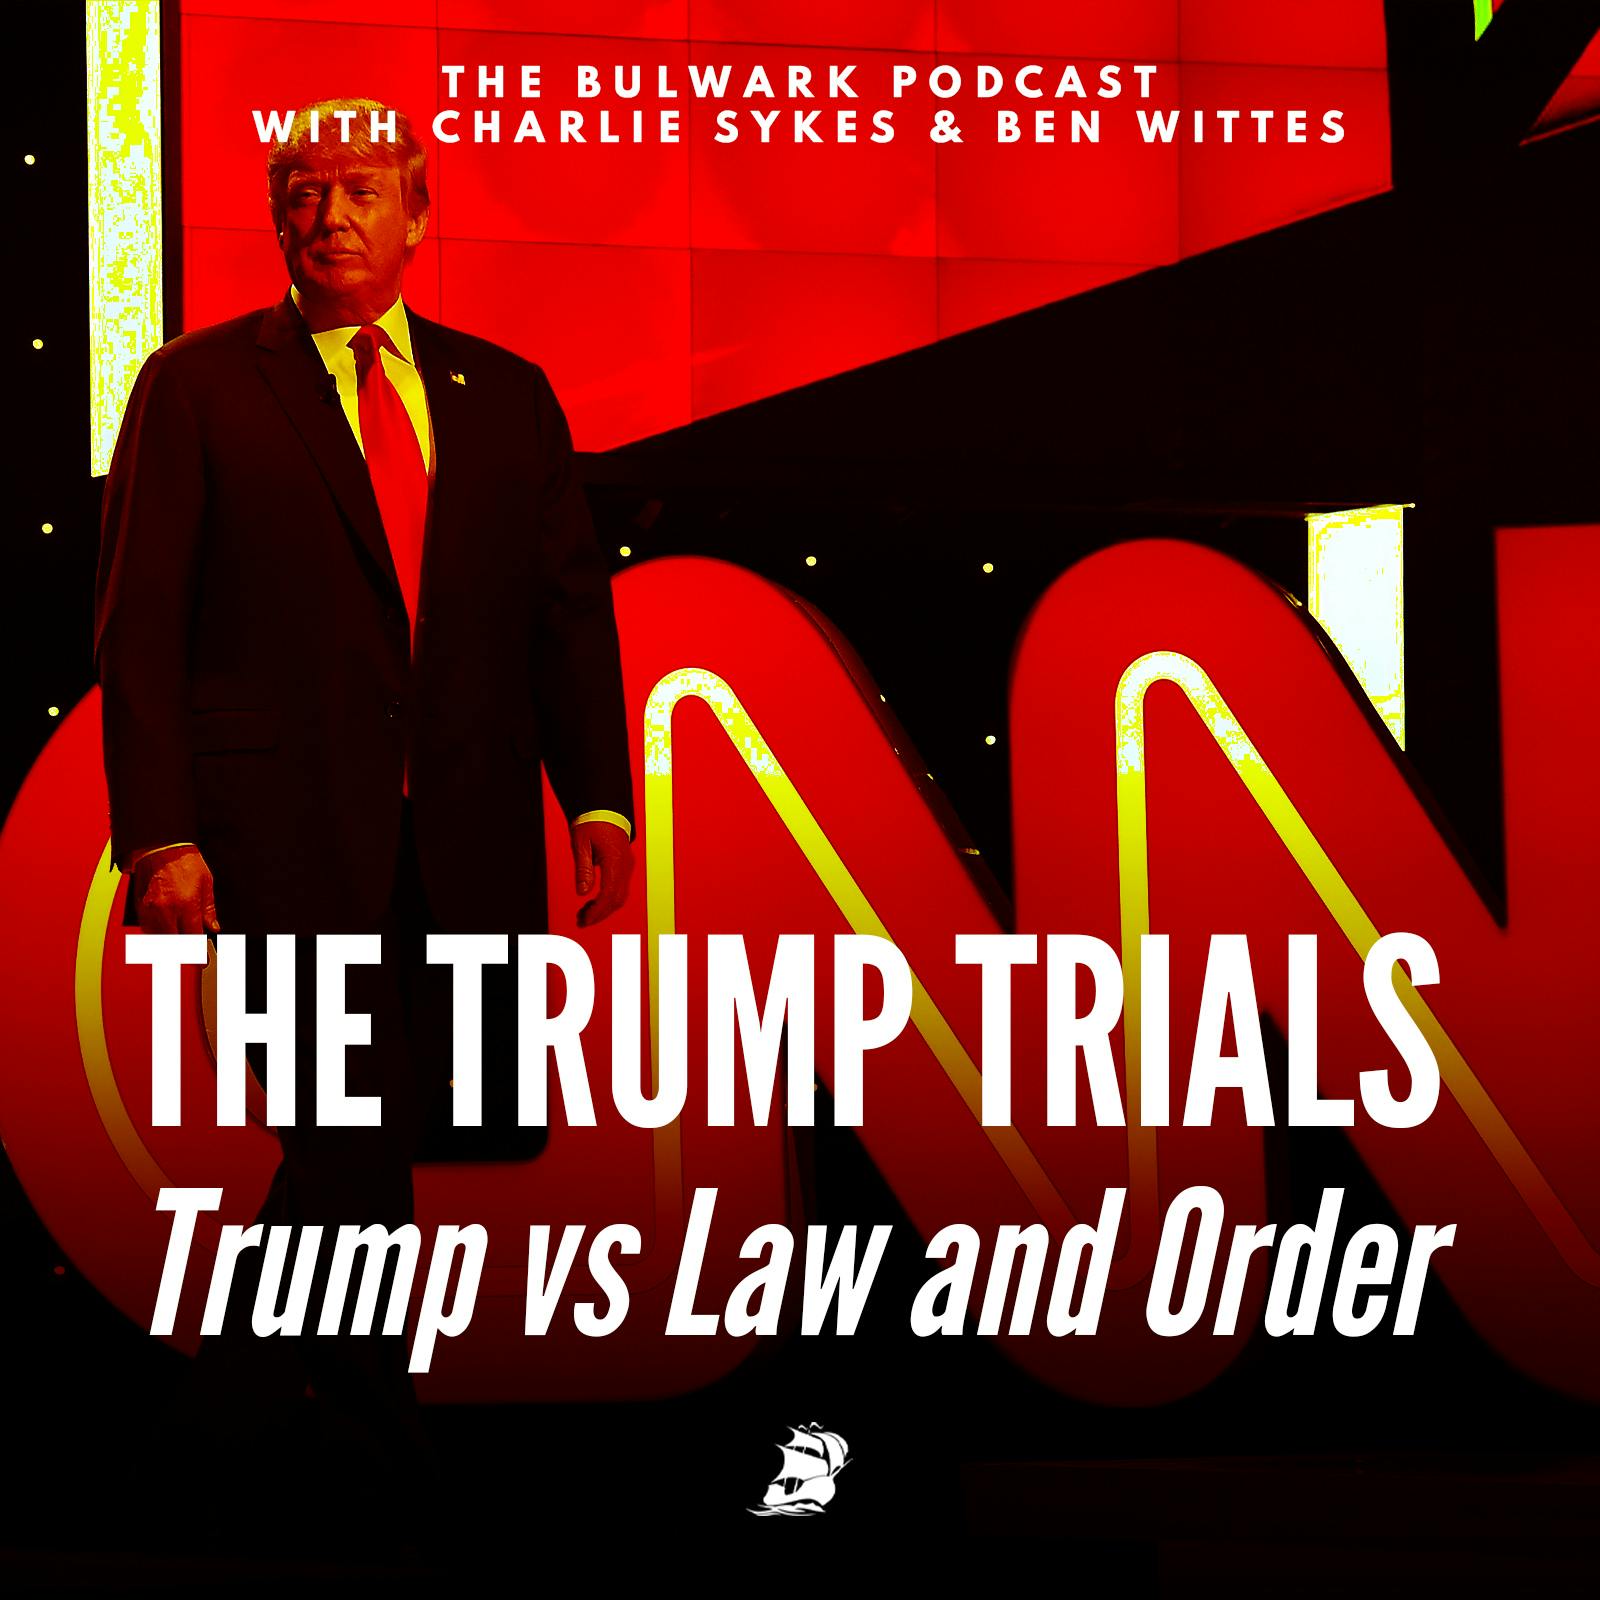 Trump vs Law and Order